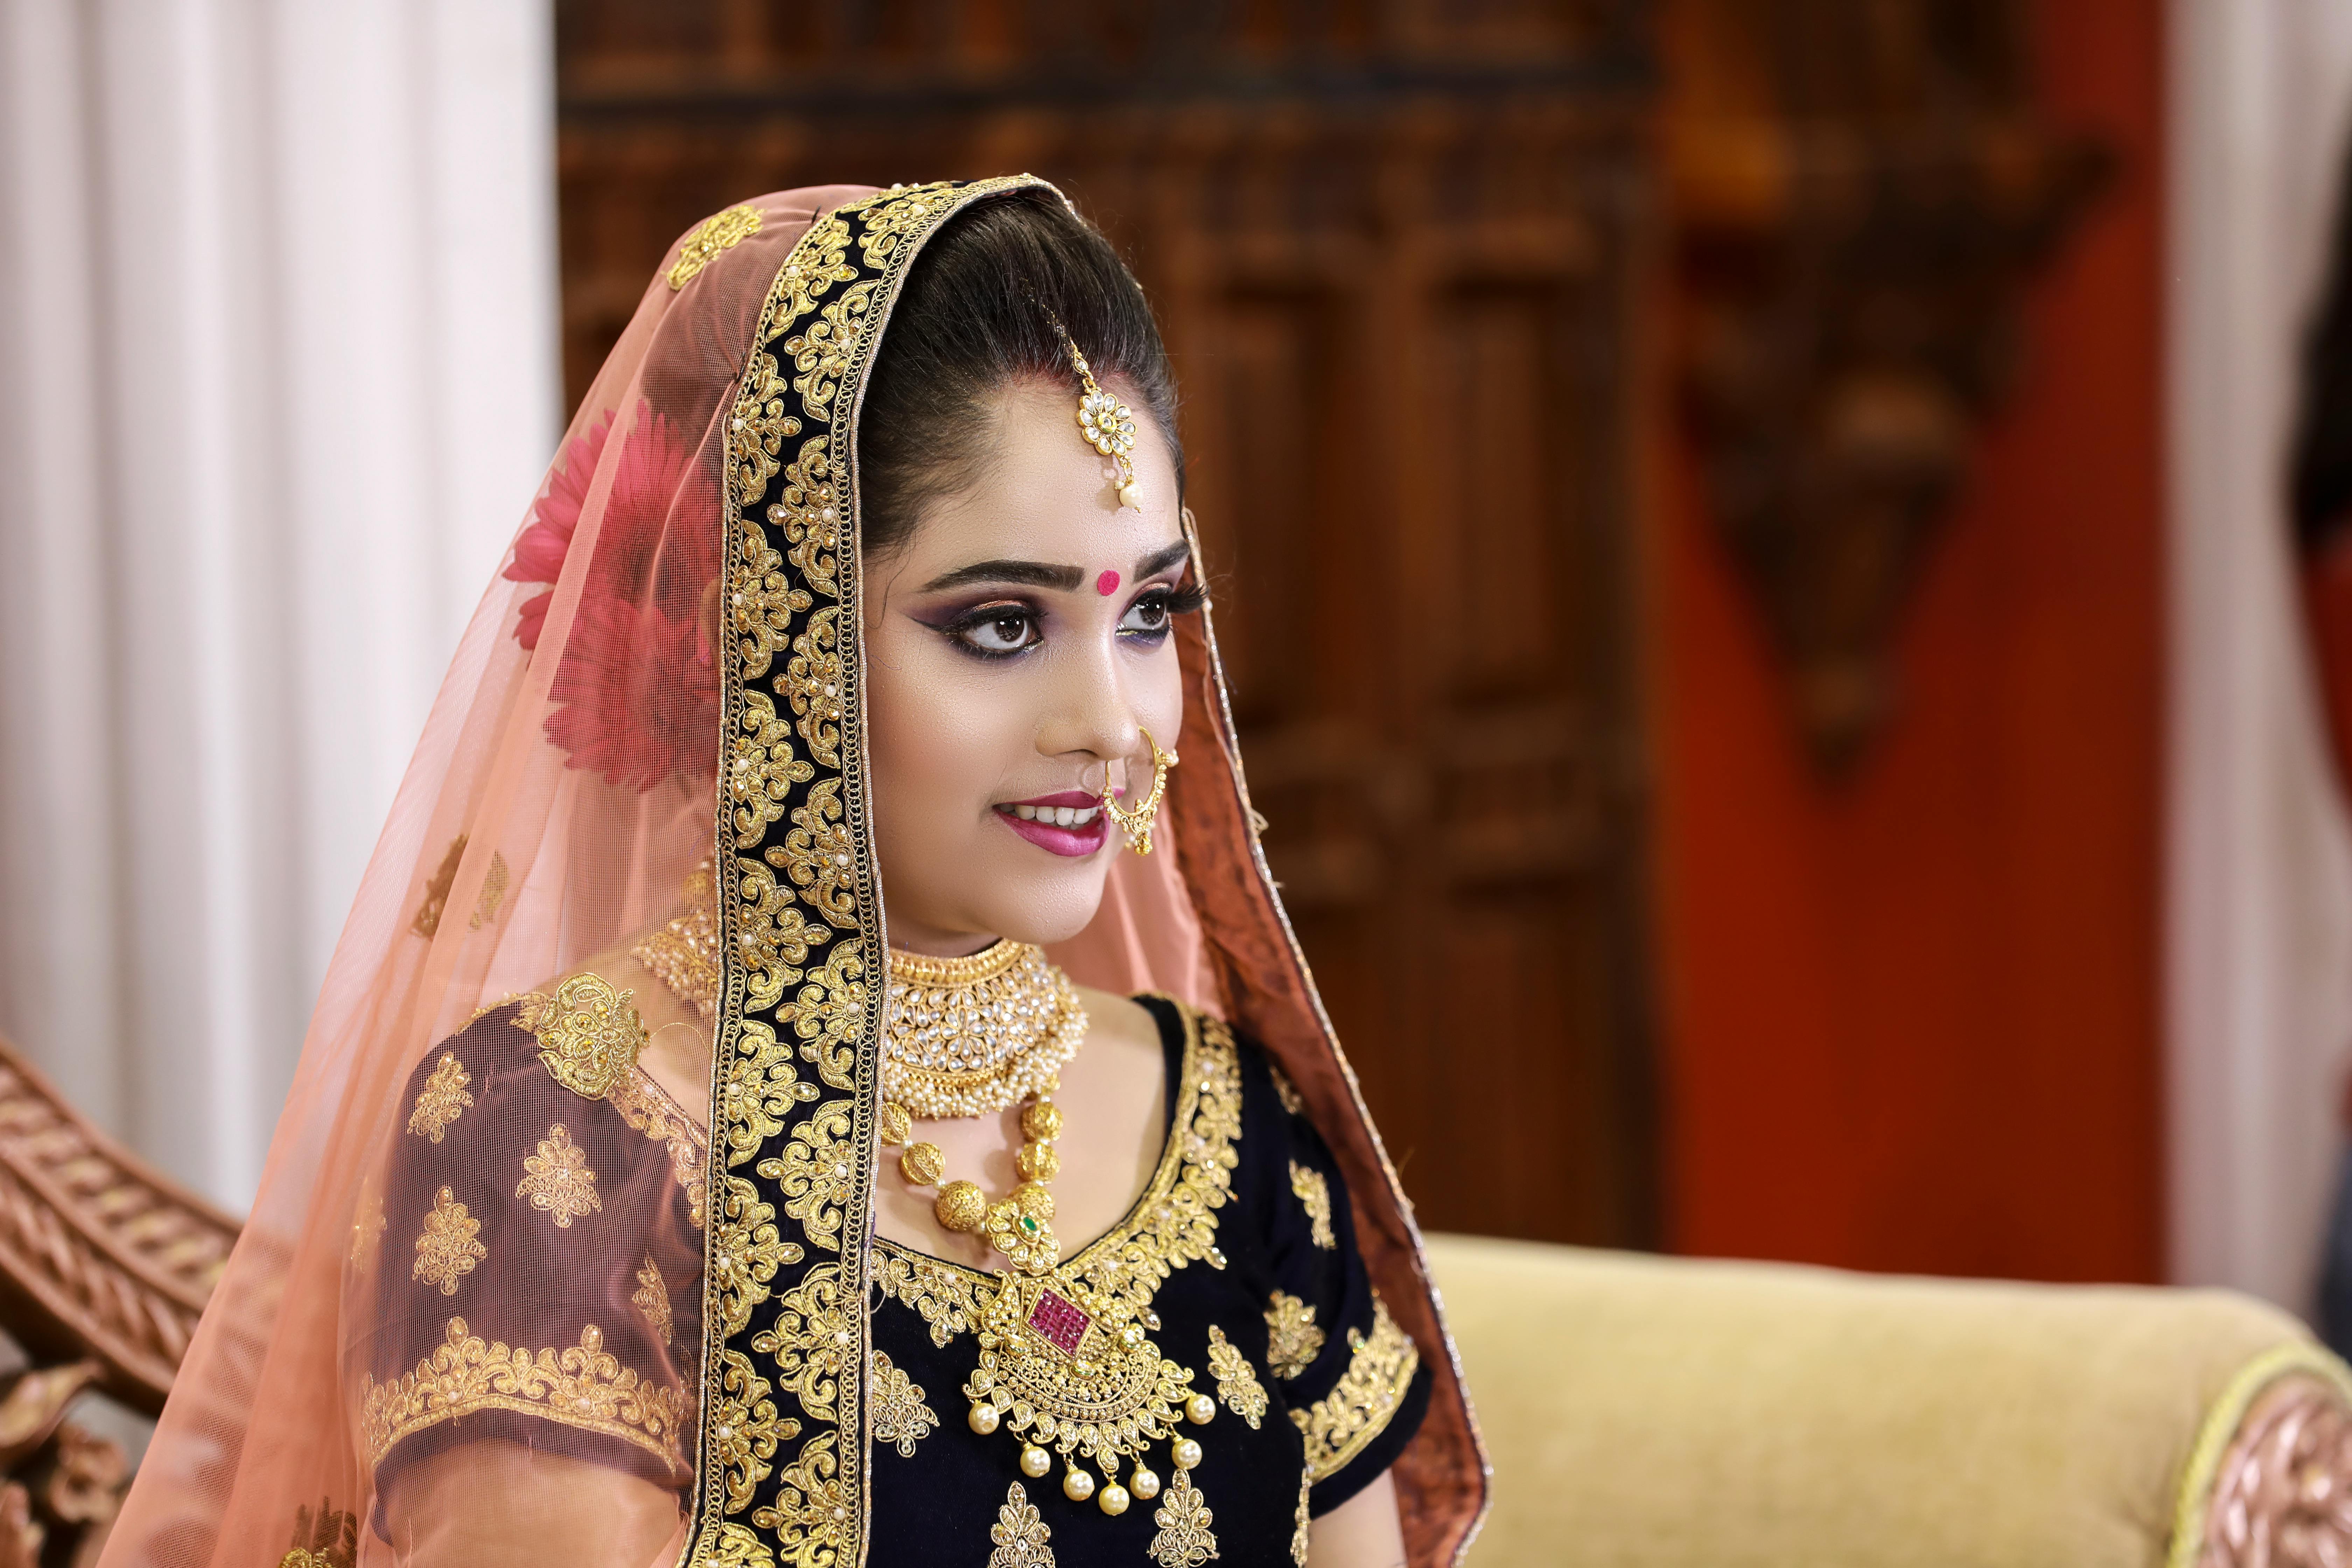 Indian Bride Photos, Download Free